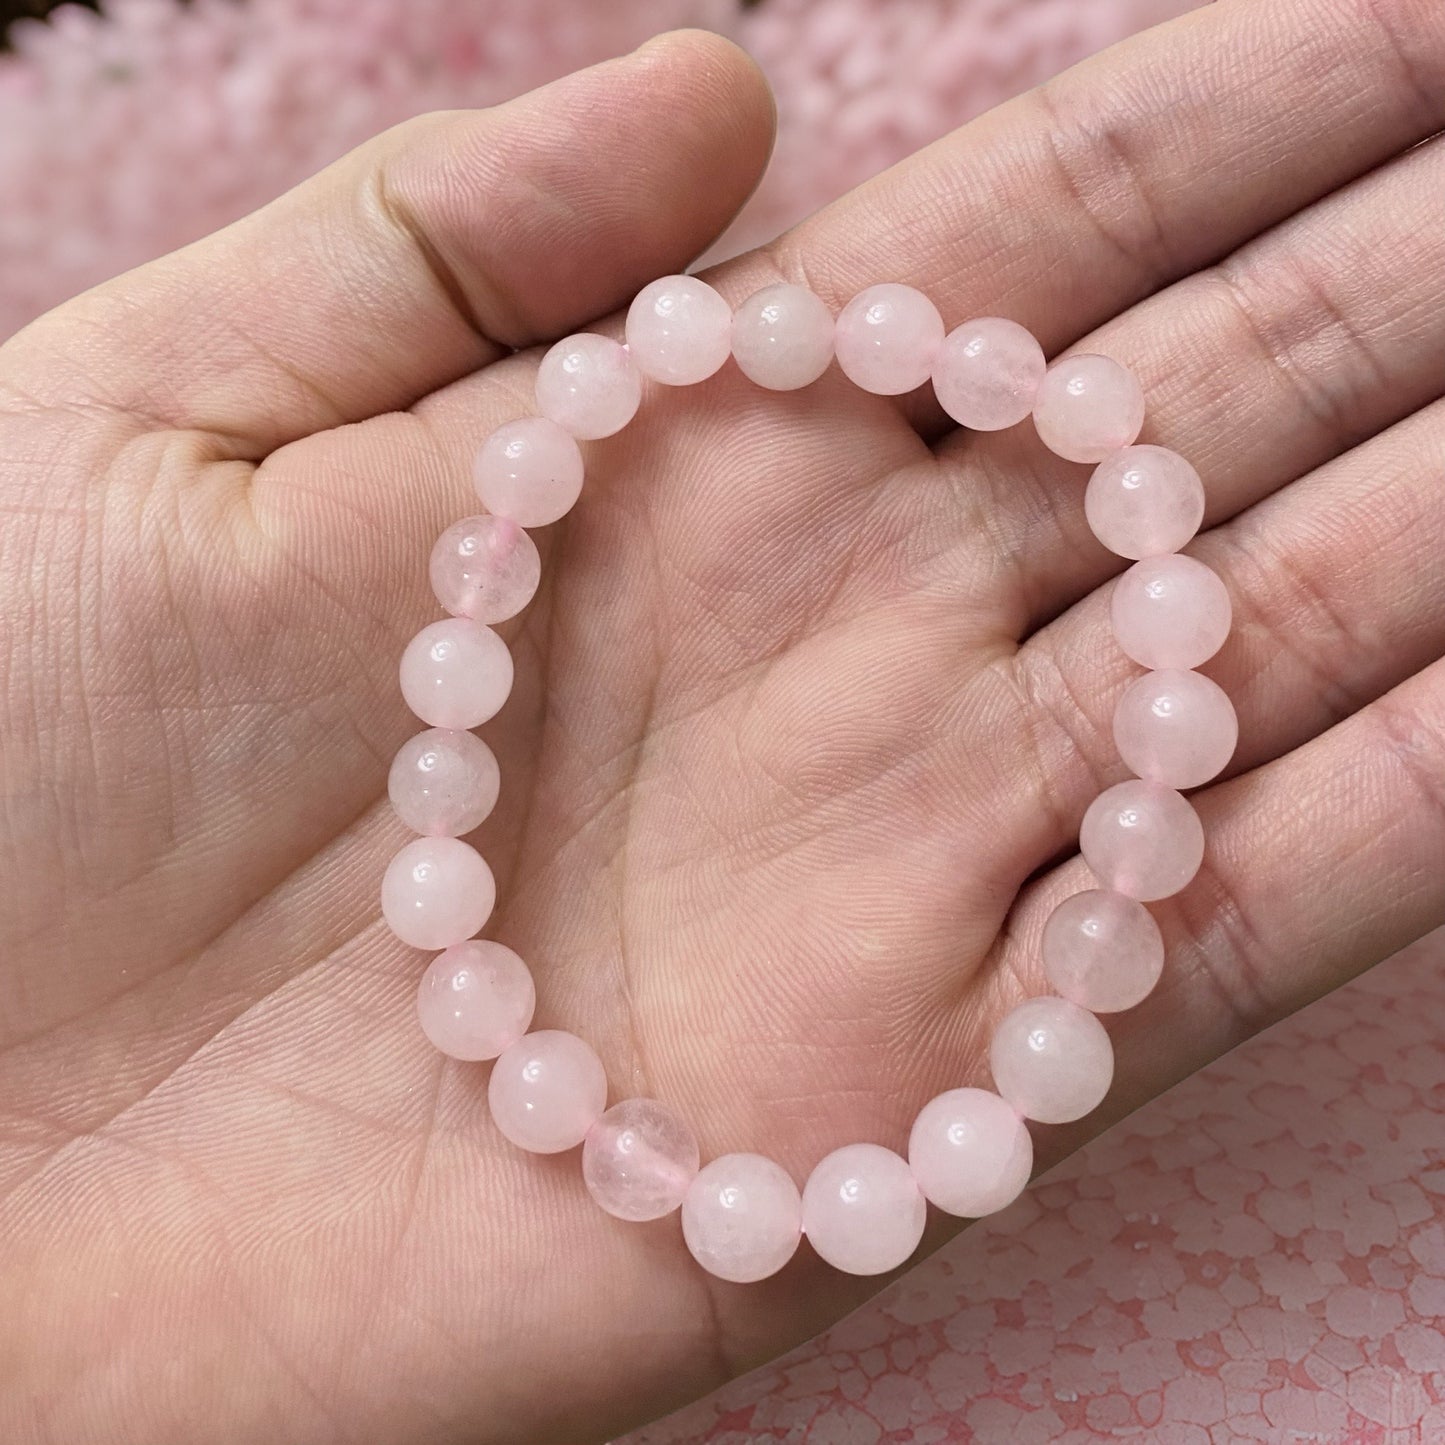 Beads Bracelets (Rose Quartz) (8 mm)